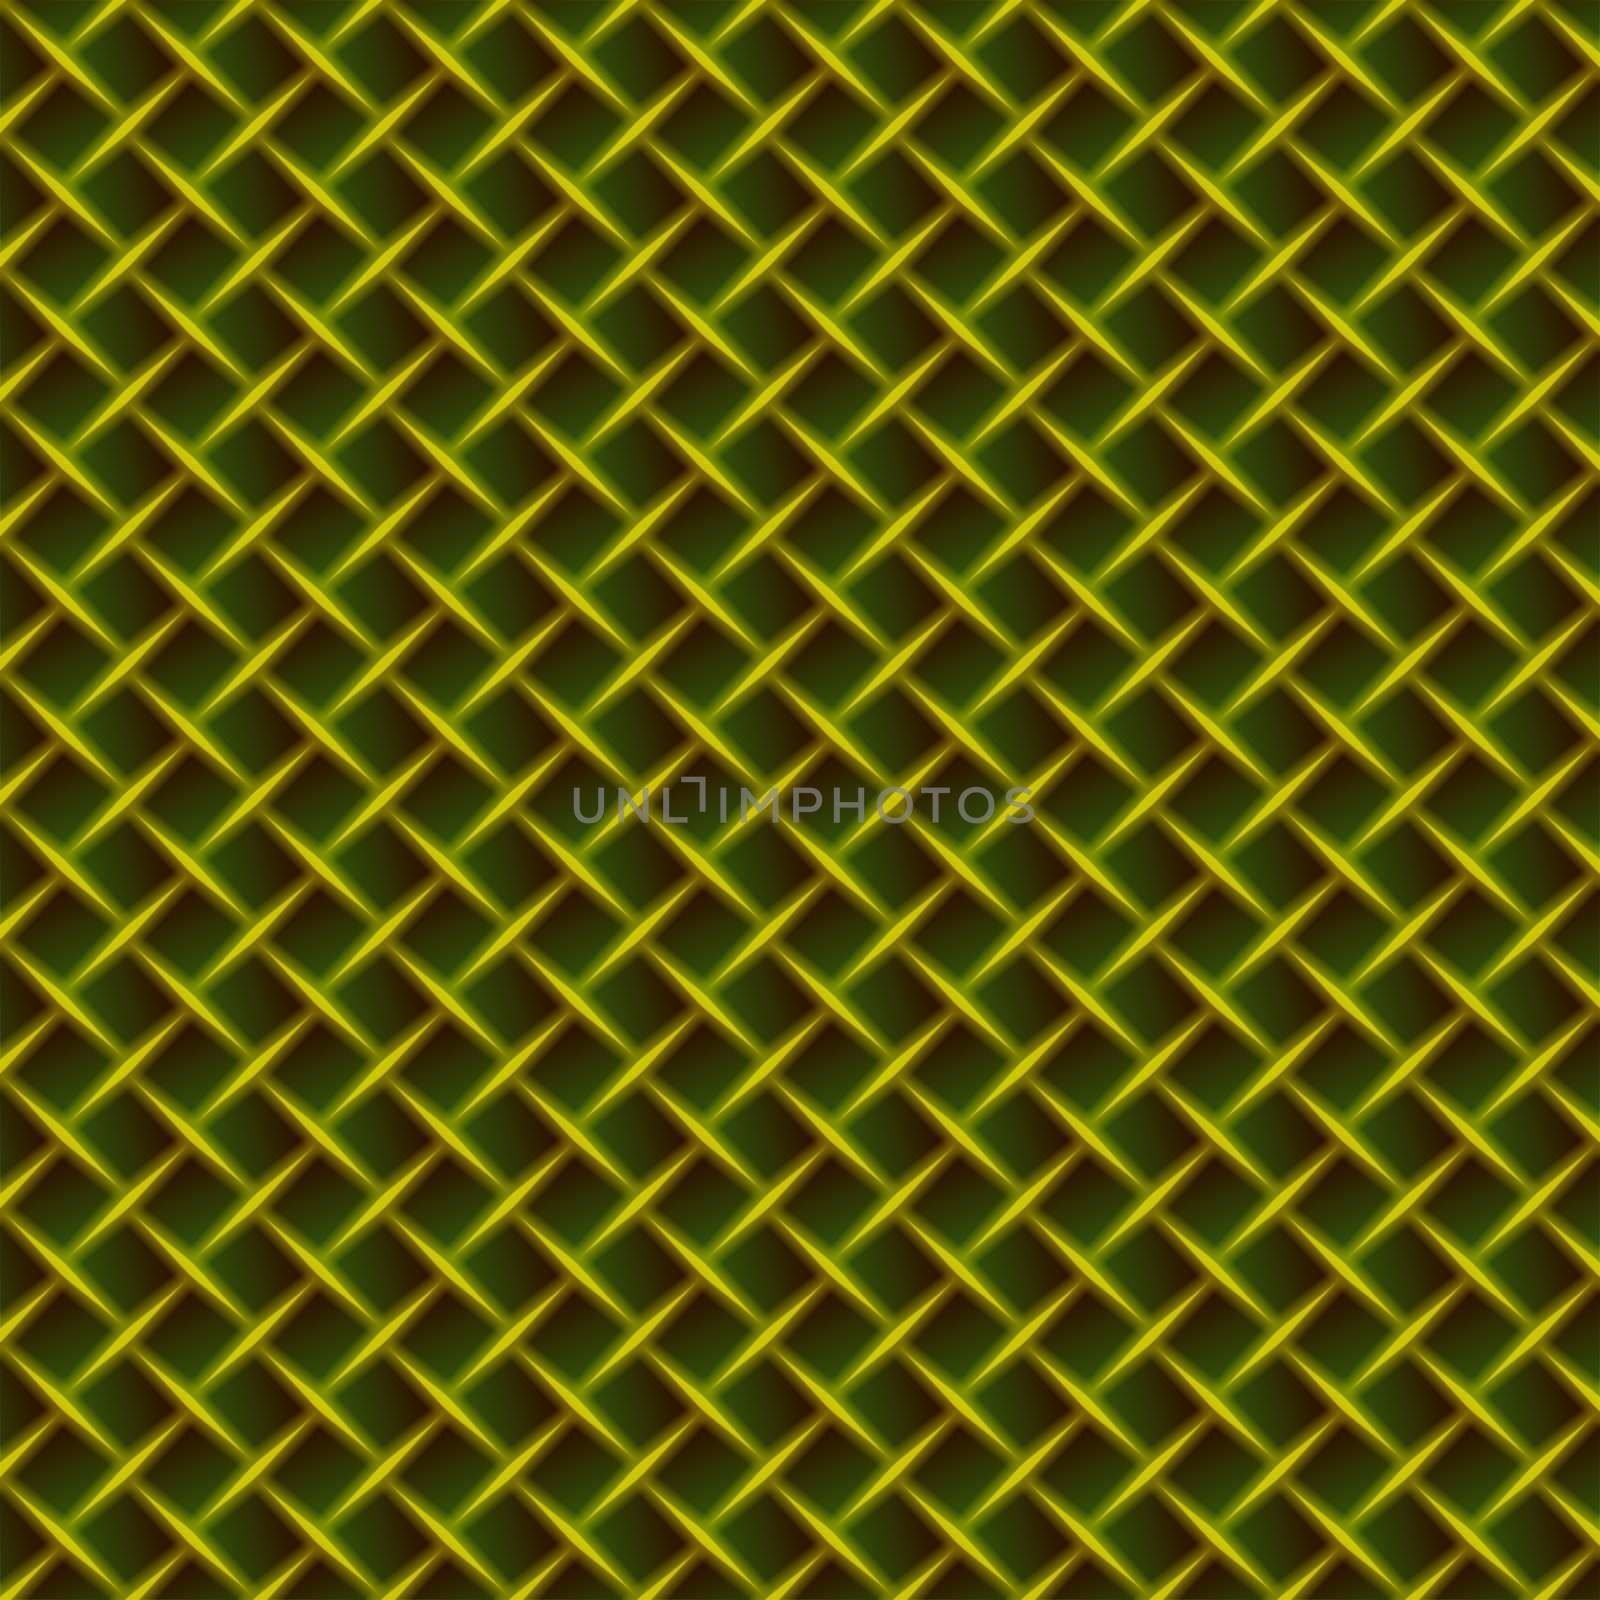 yellow wire netting background by jbouzou